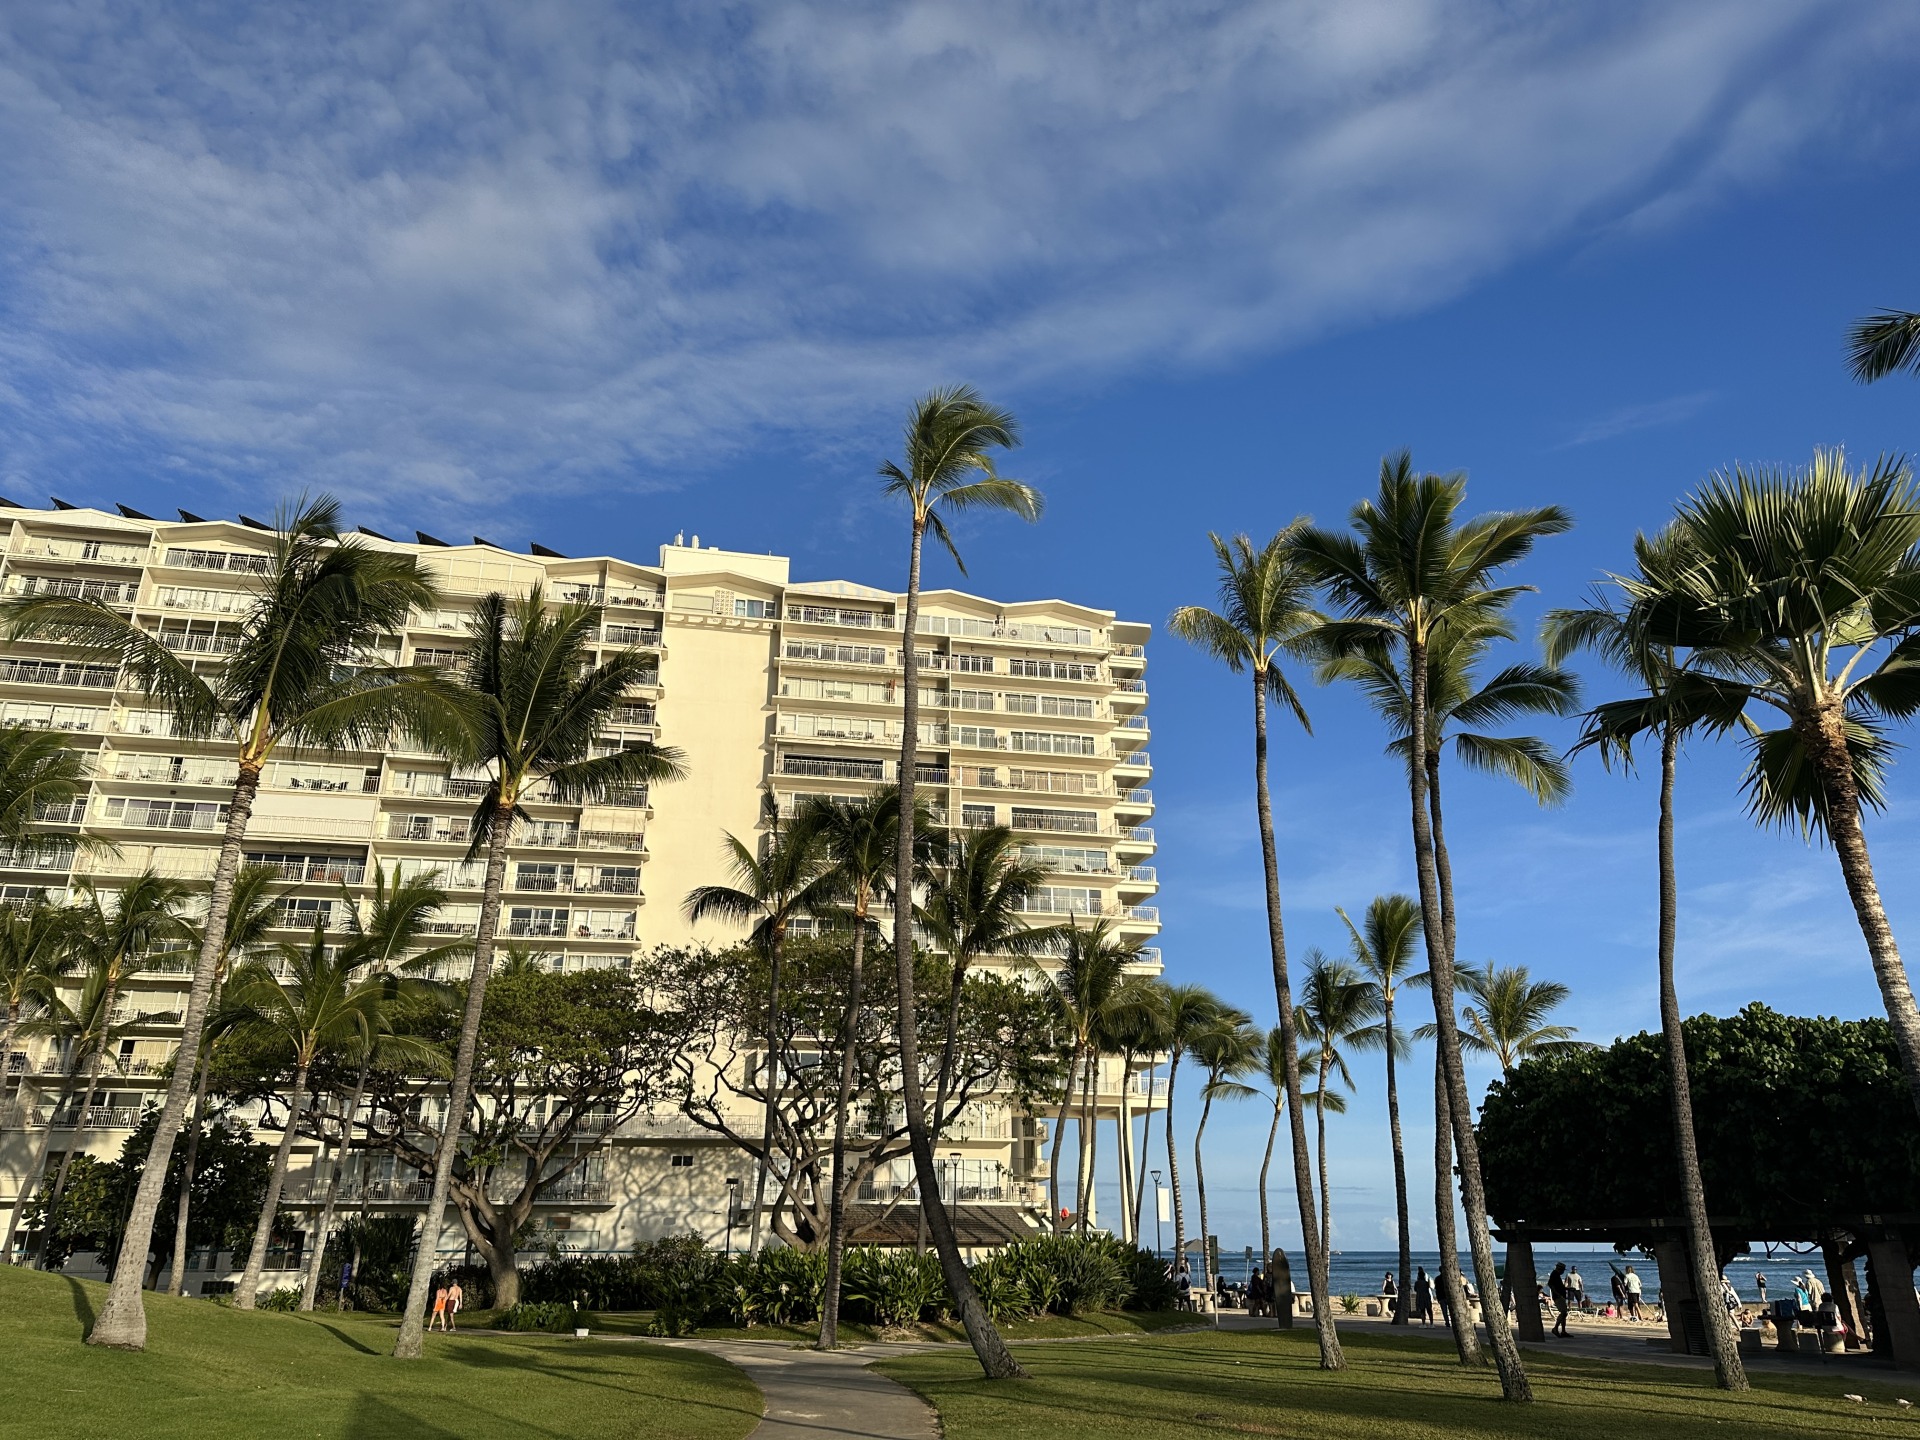 Waikiki Shore oceanfront condos